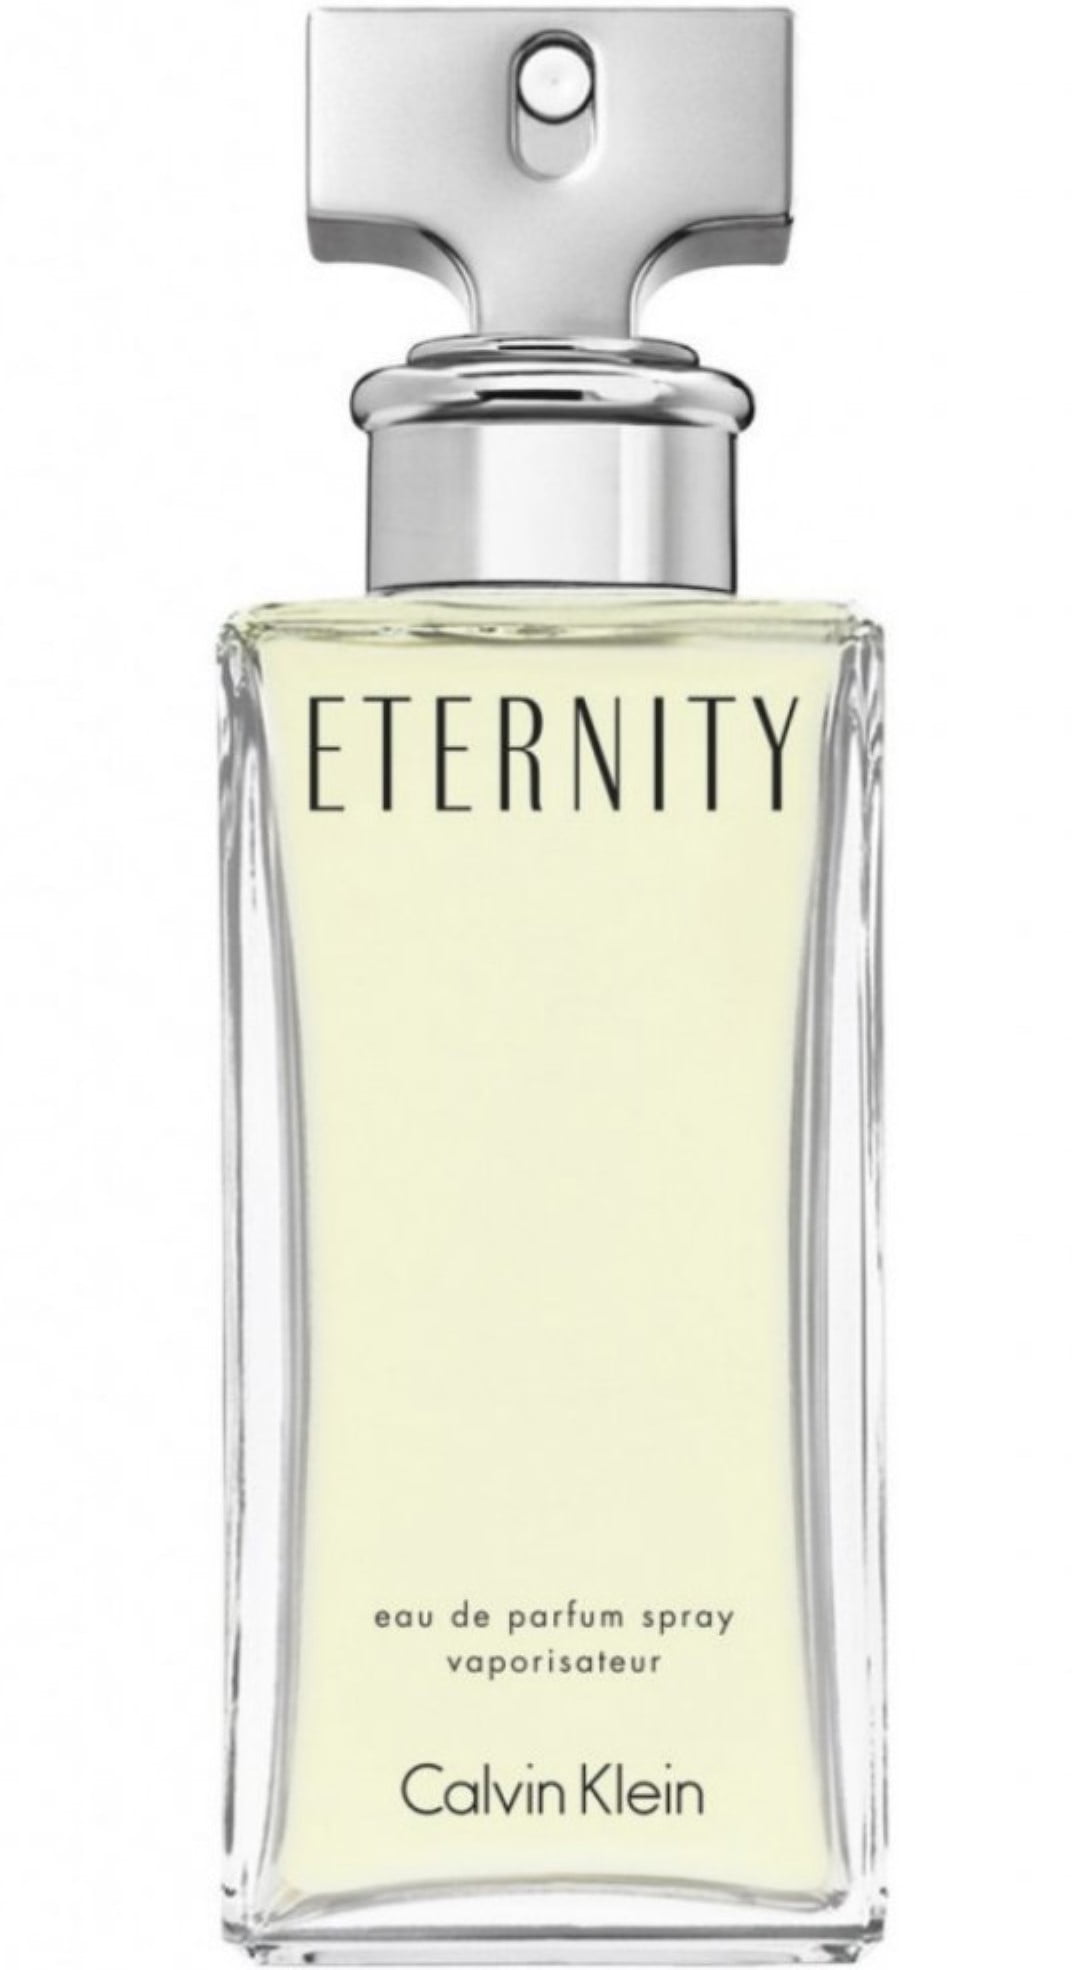 Buy Calvin Klein Eternity Eau De Parfum Perfume For Women 34 Oz Online At Lowest Price In